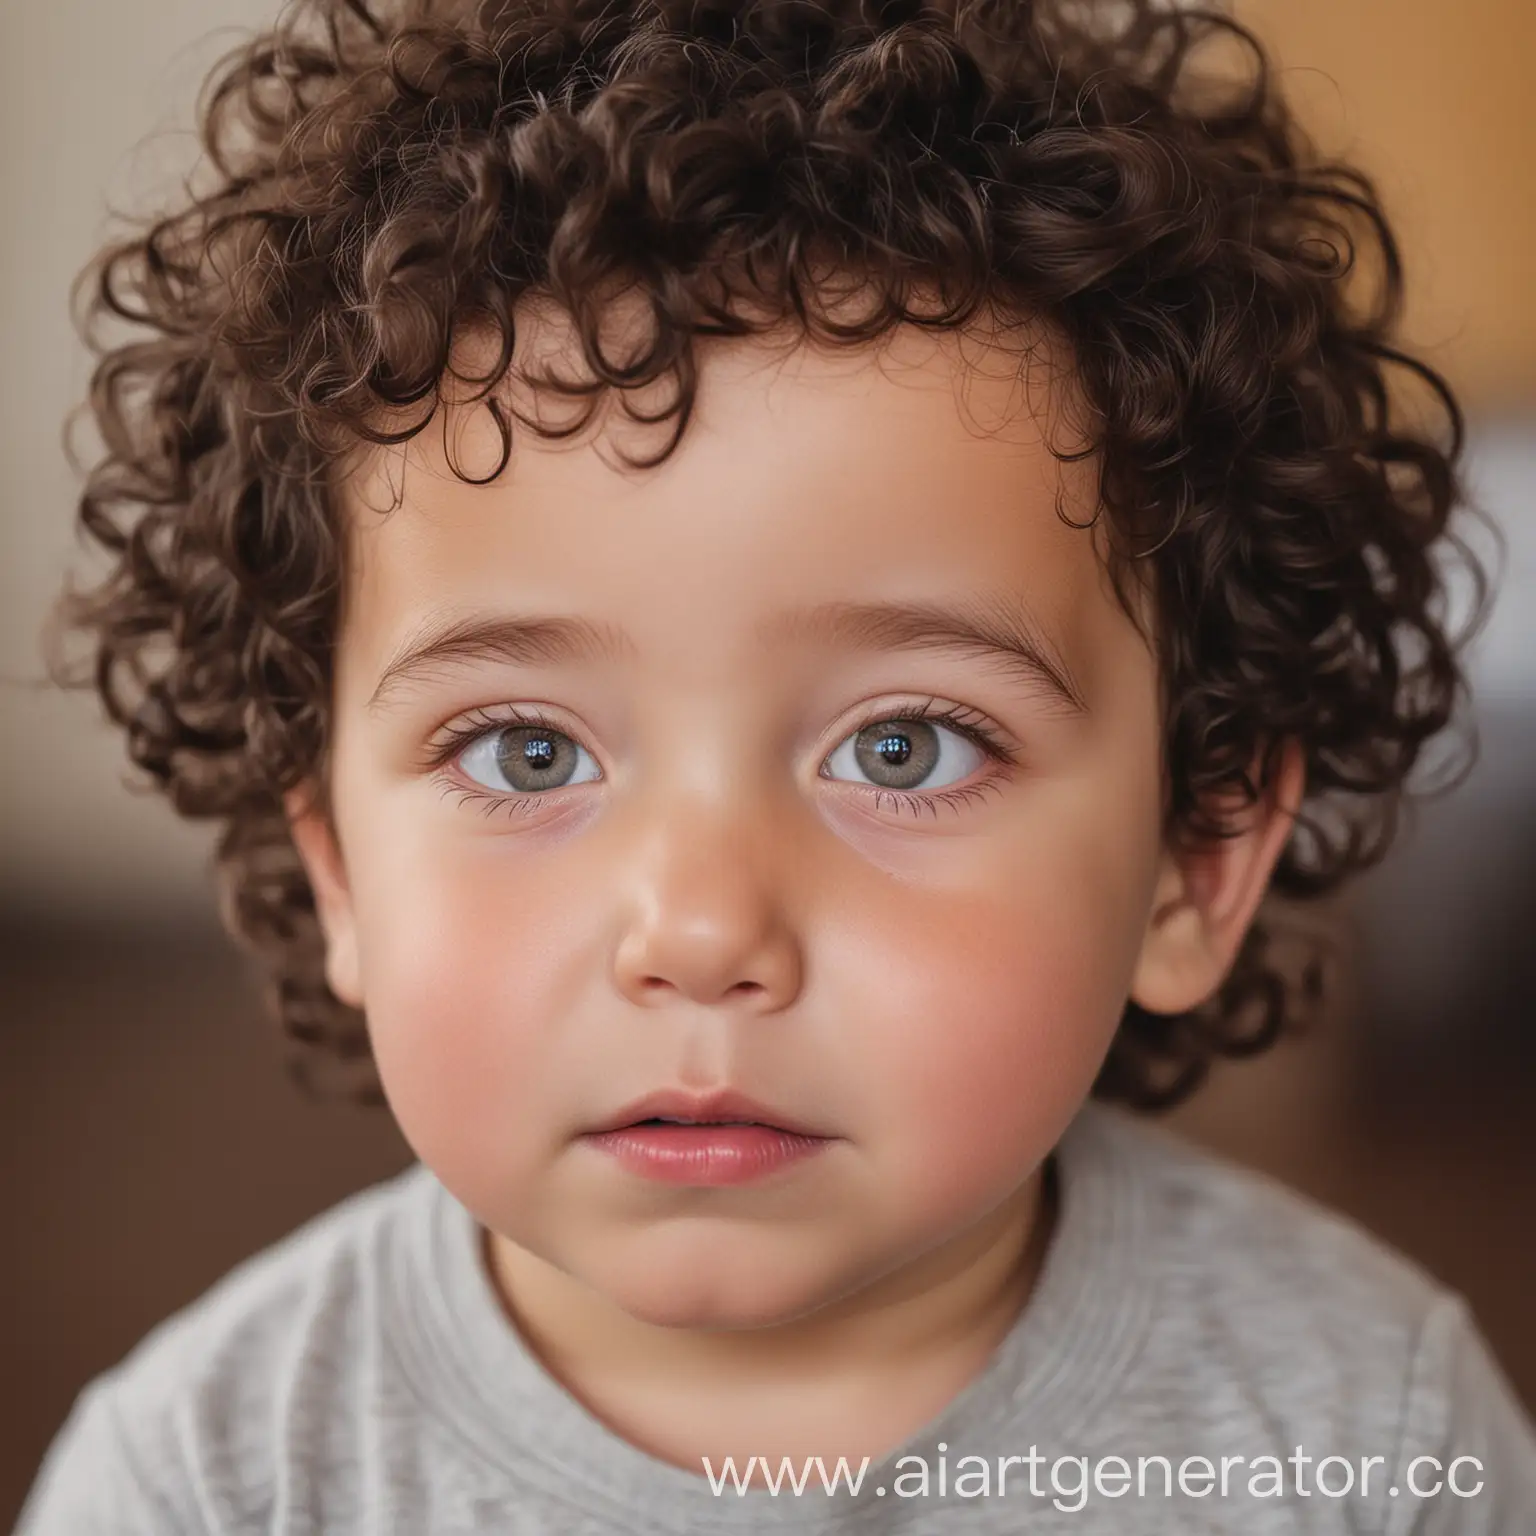 CurlyHaired-TwoYearOld-Boy-with-Heterochromia-and-Chubby-Cheeks